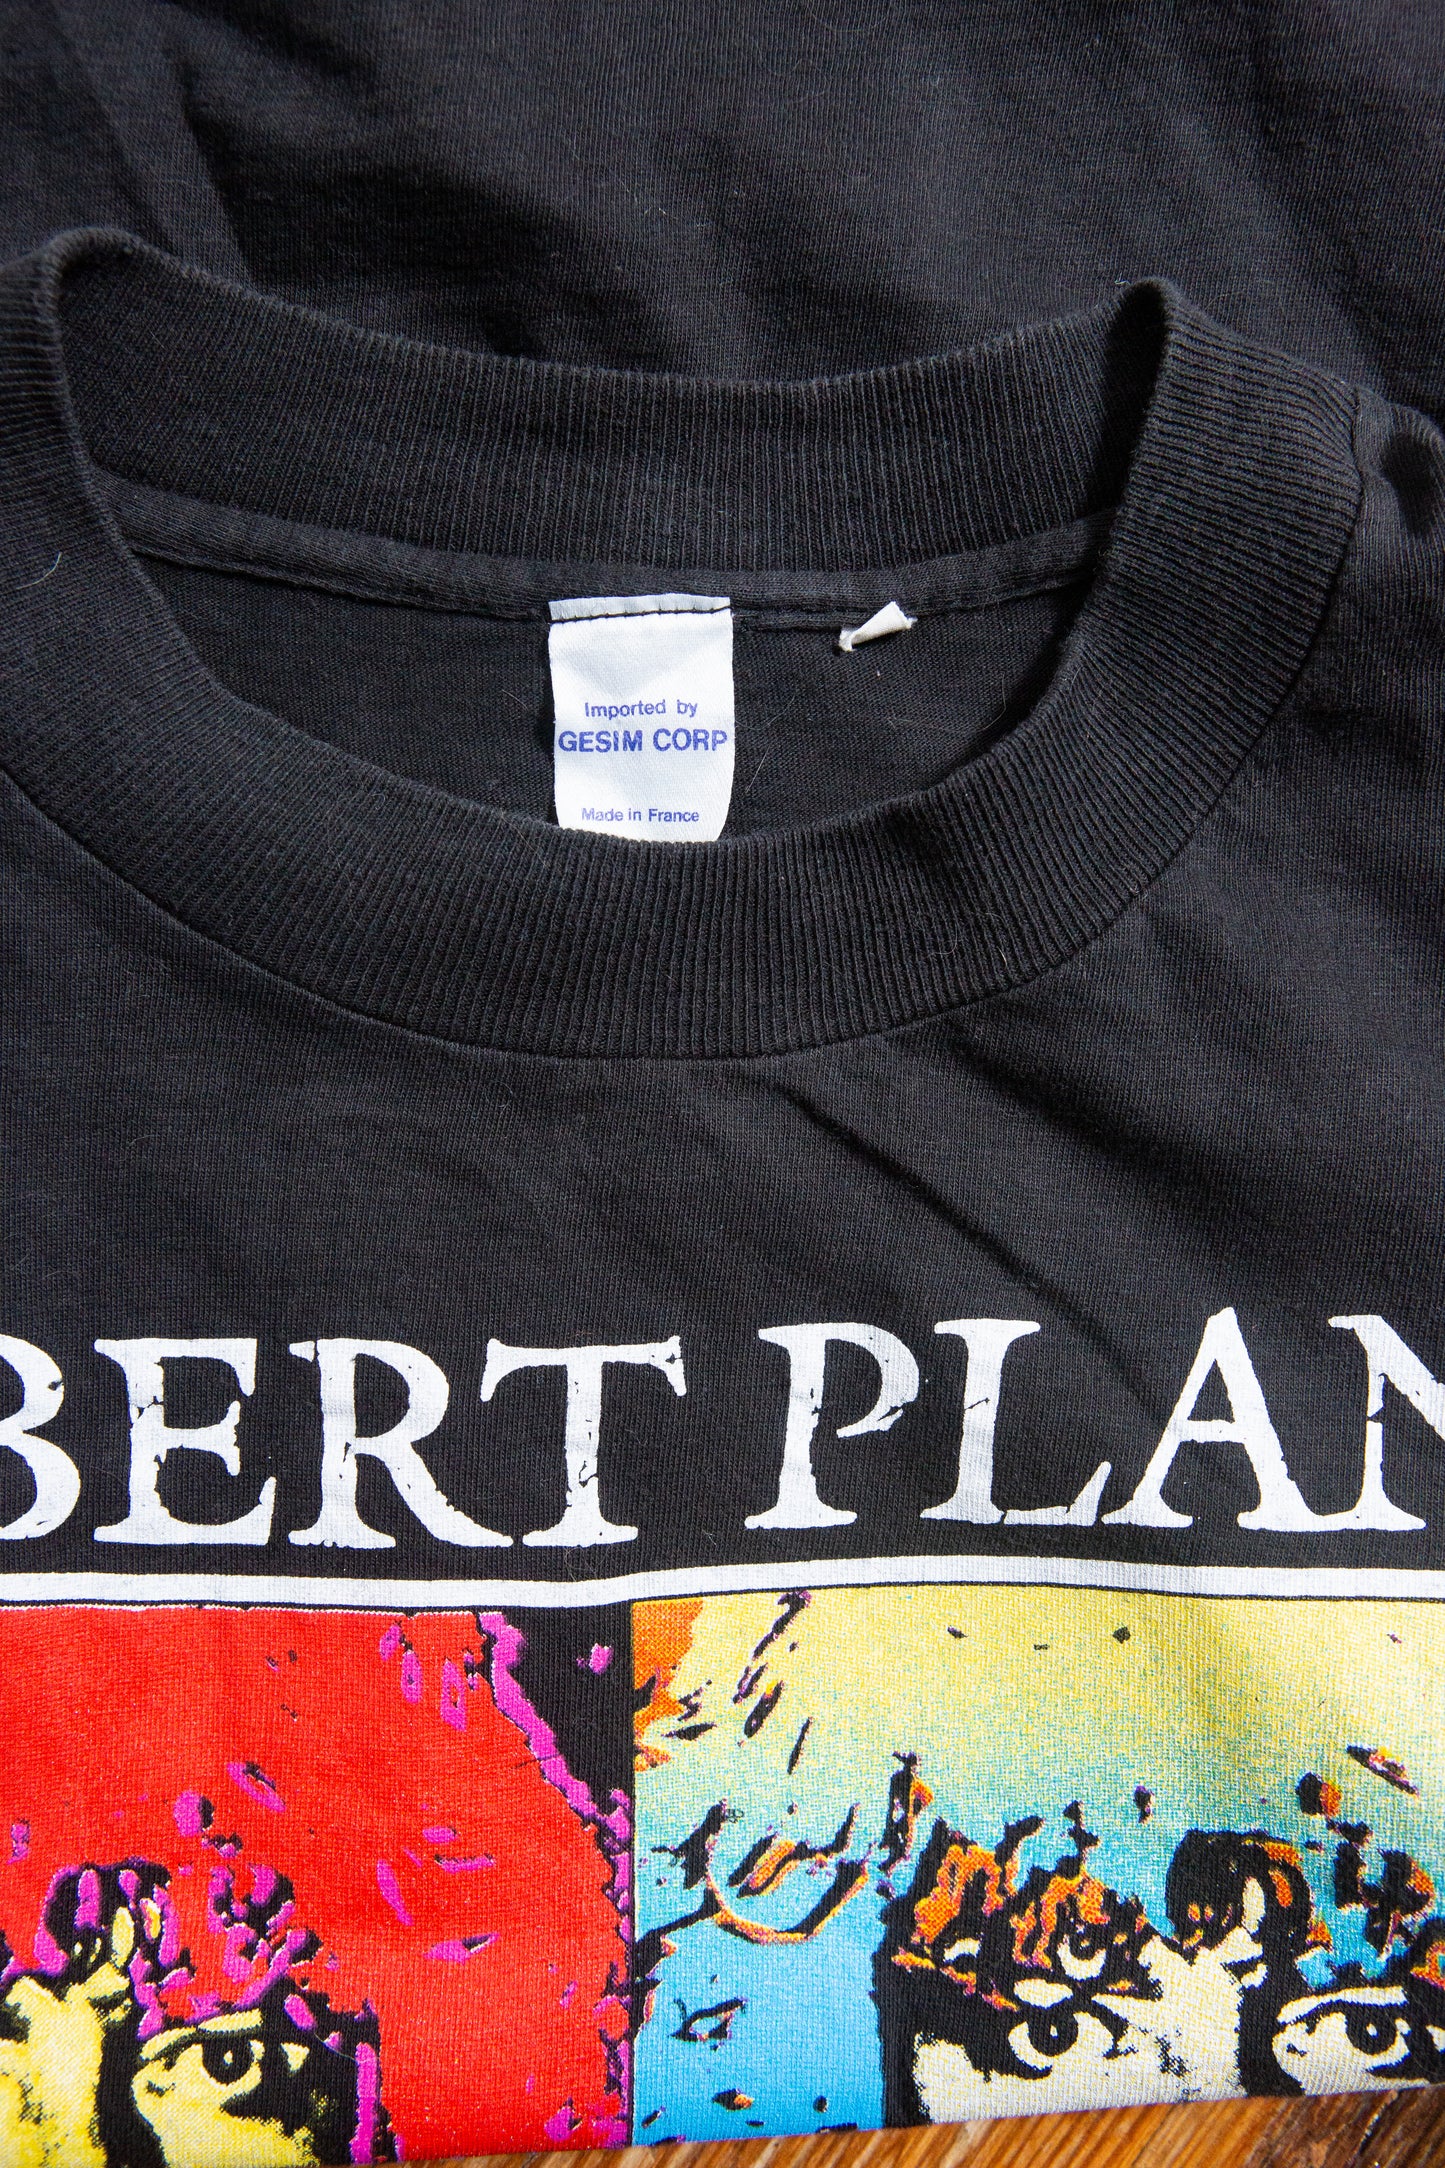 Vintage 1990 Robert Plant Nirvana Tour T-shirt Size M